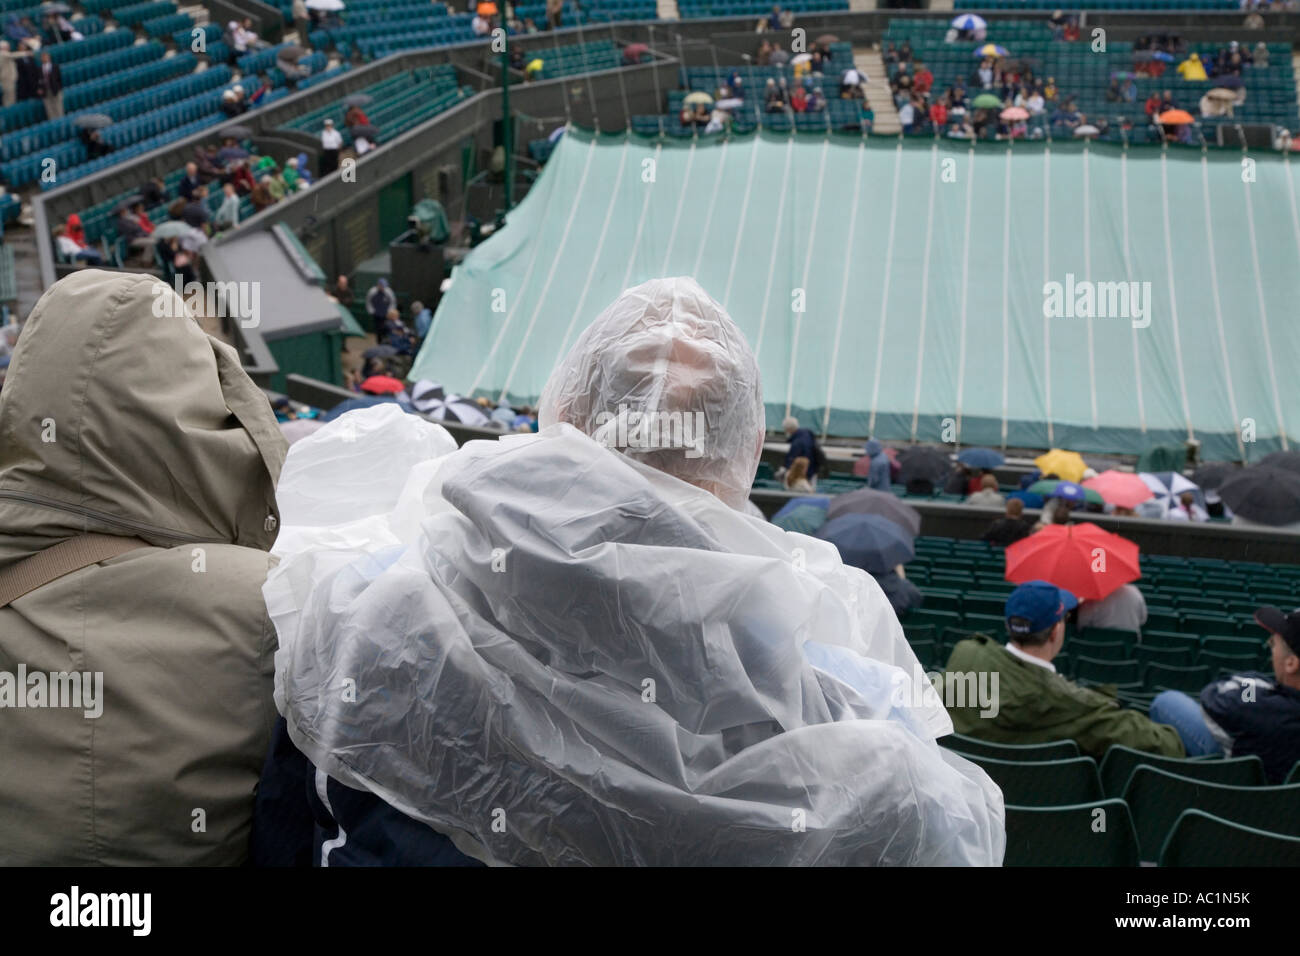 El centro de la cancha y espectadores en interrupciones de lluvia impermeable al Campeonato de tenis de Wimbledon UK Foto de stock